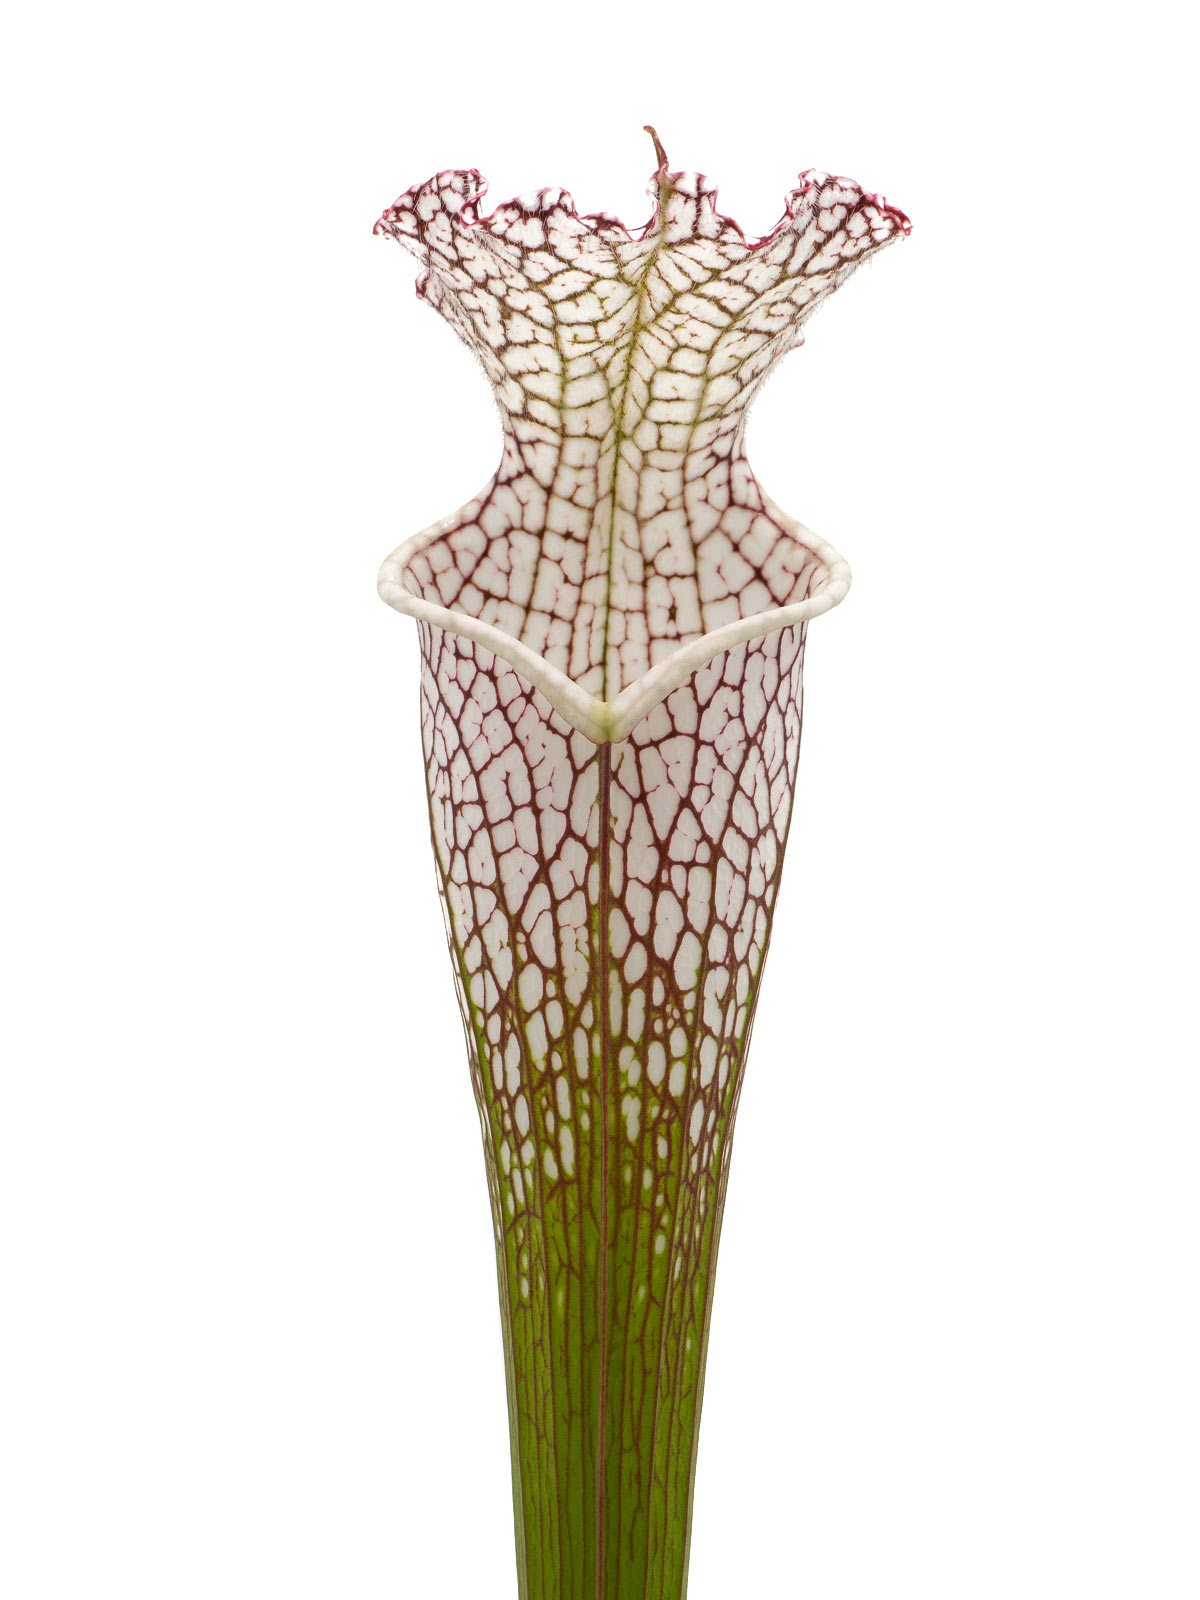 Sarracenia leucophylla - MK L133A, Splinter Hill, Perdido, Baldwin County, Alabama